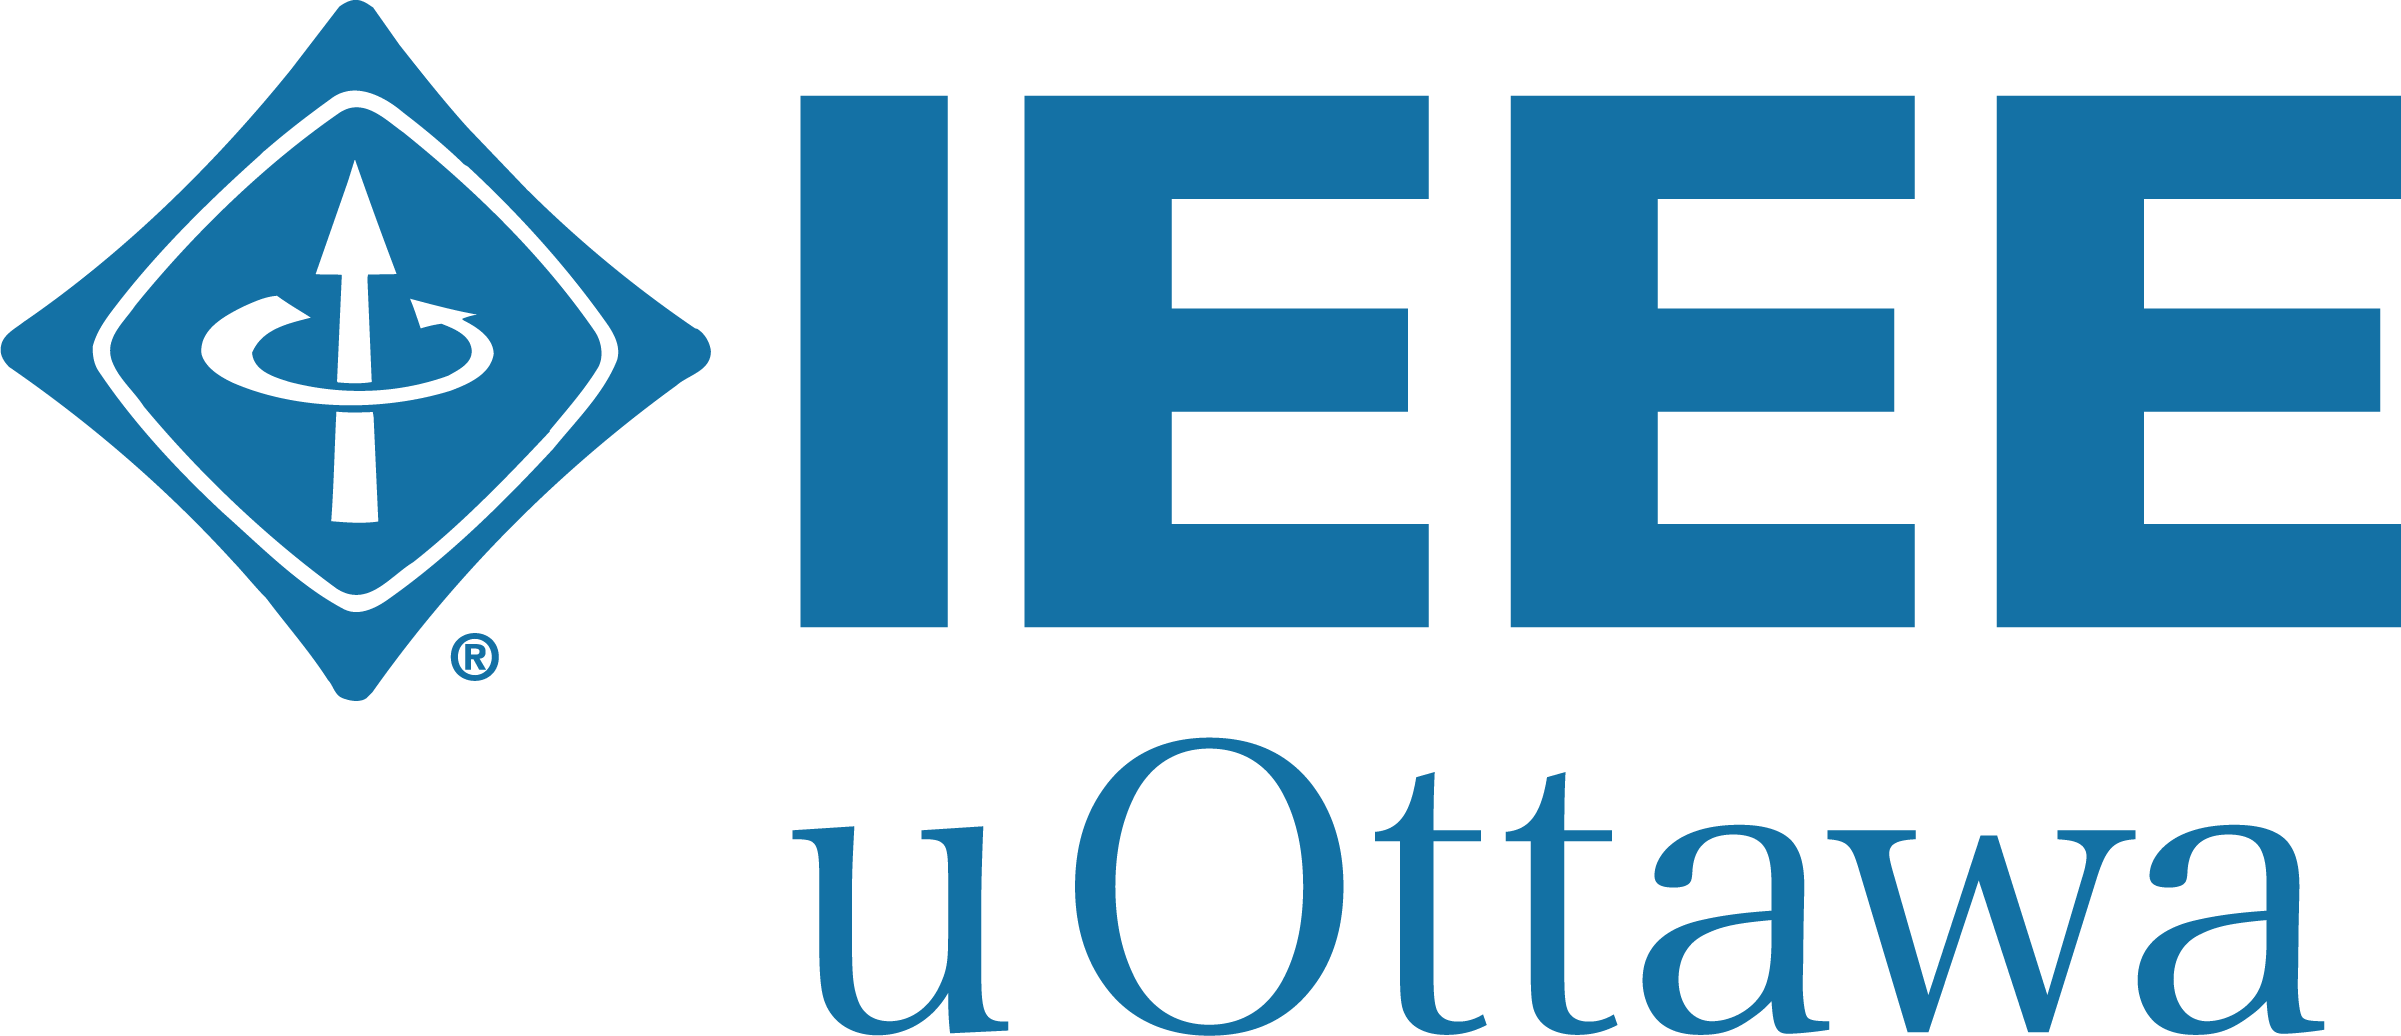 IEEE uOttawa Student Branch logo